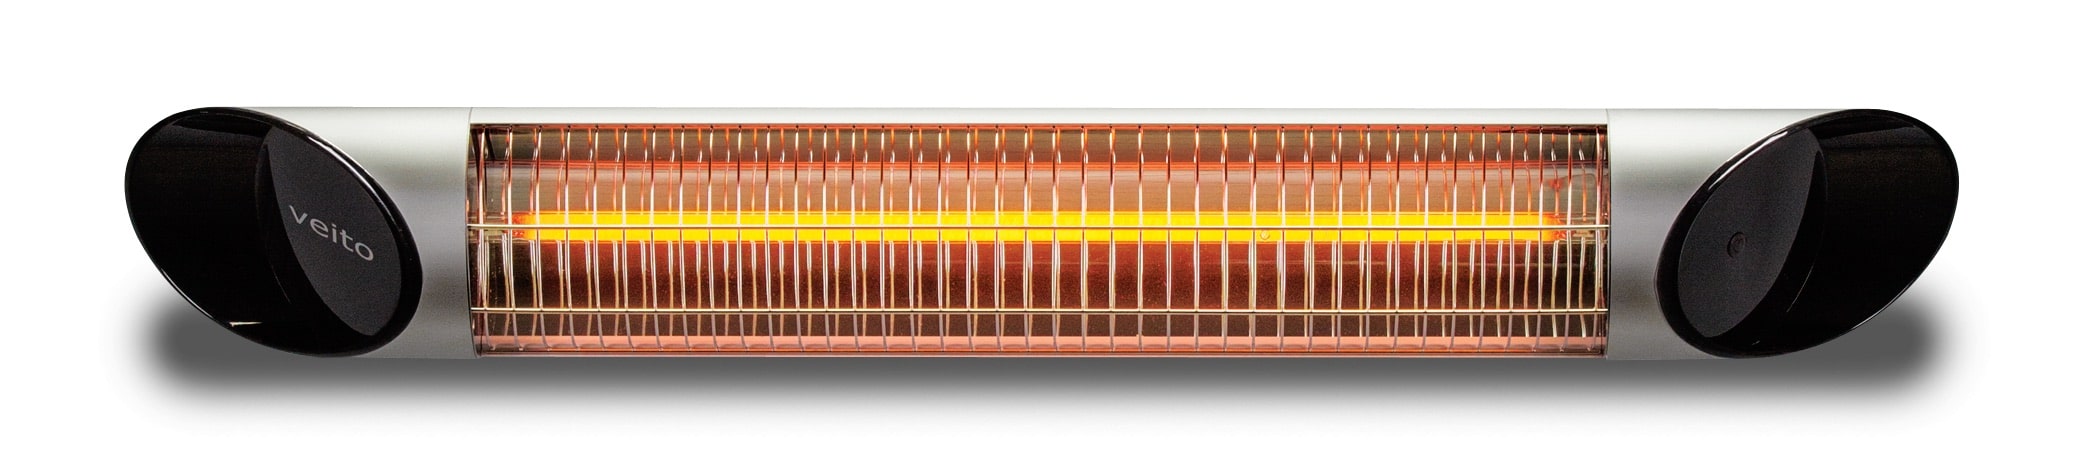 chauffage veito blade electrique infrarouge